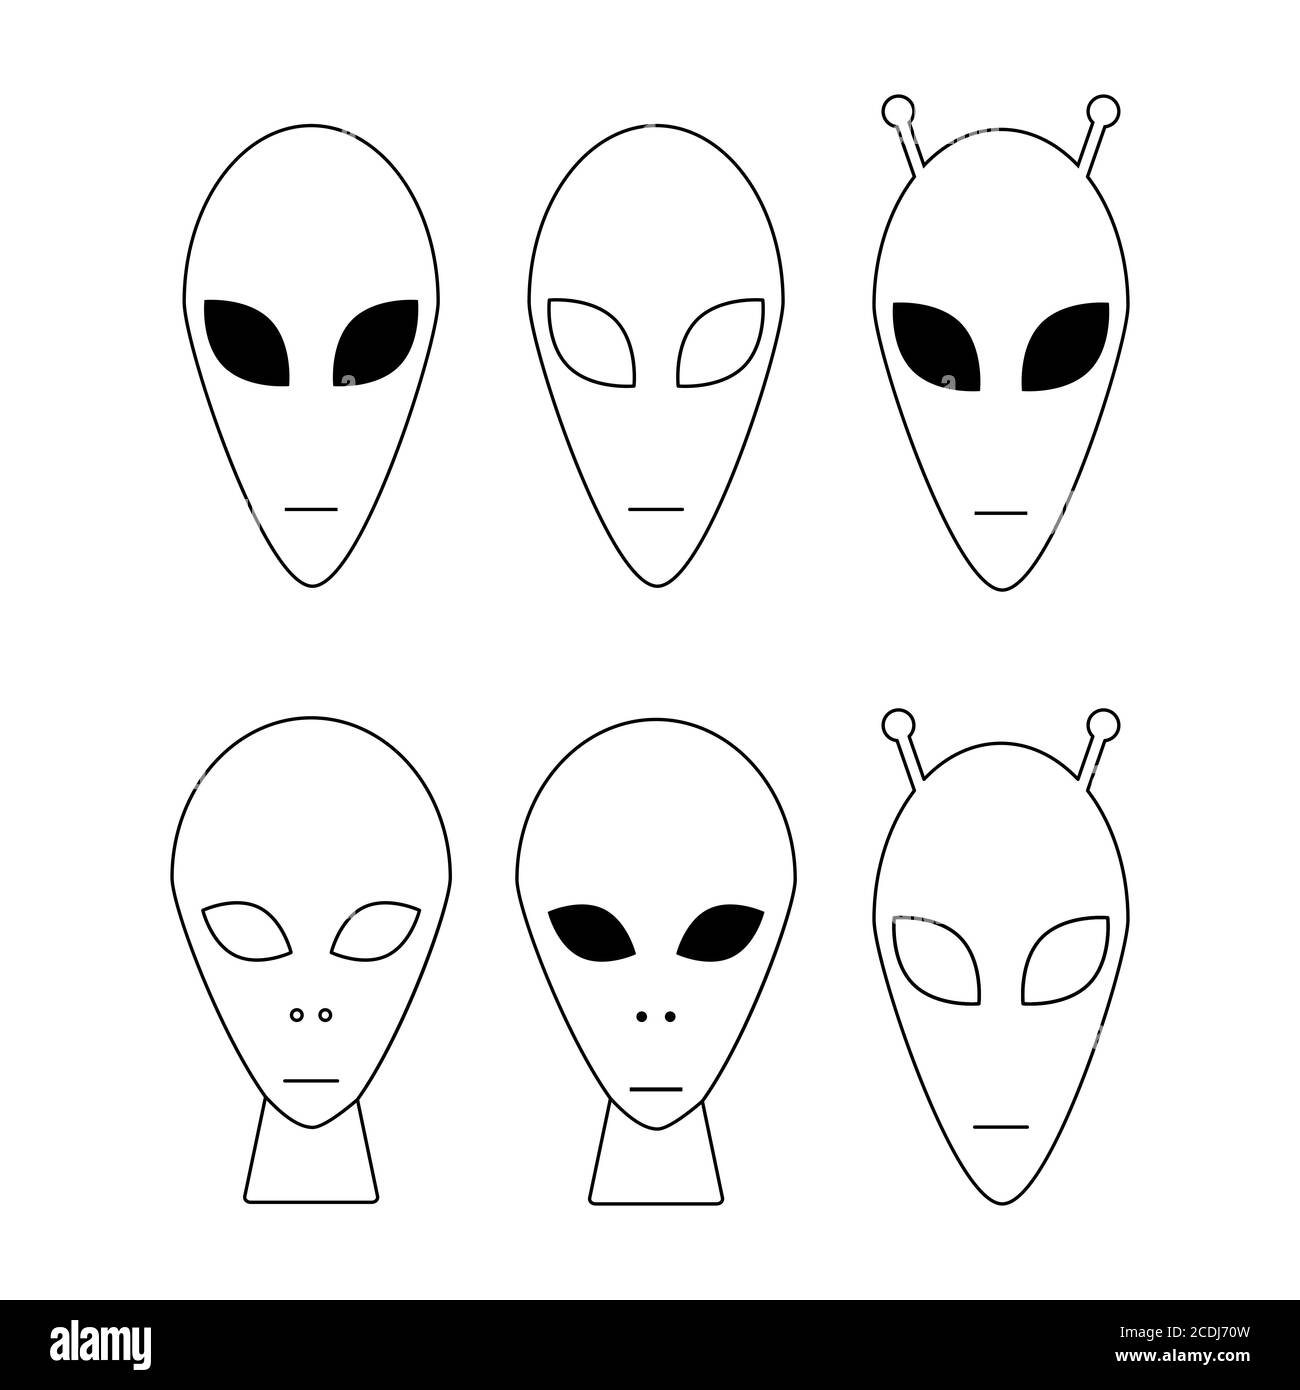 alien head coloring pages